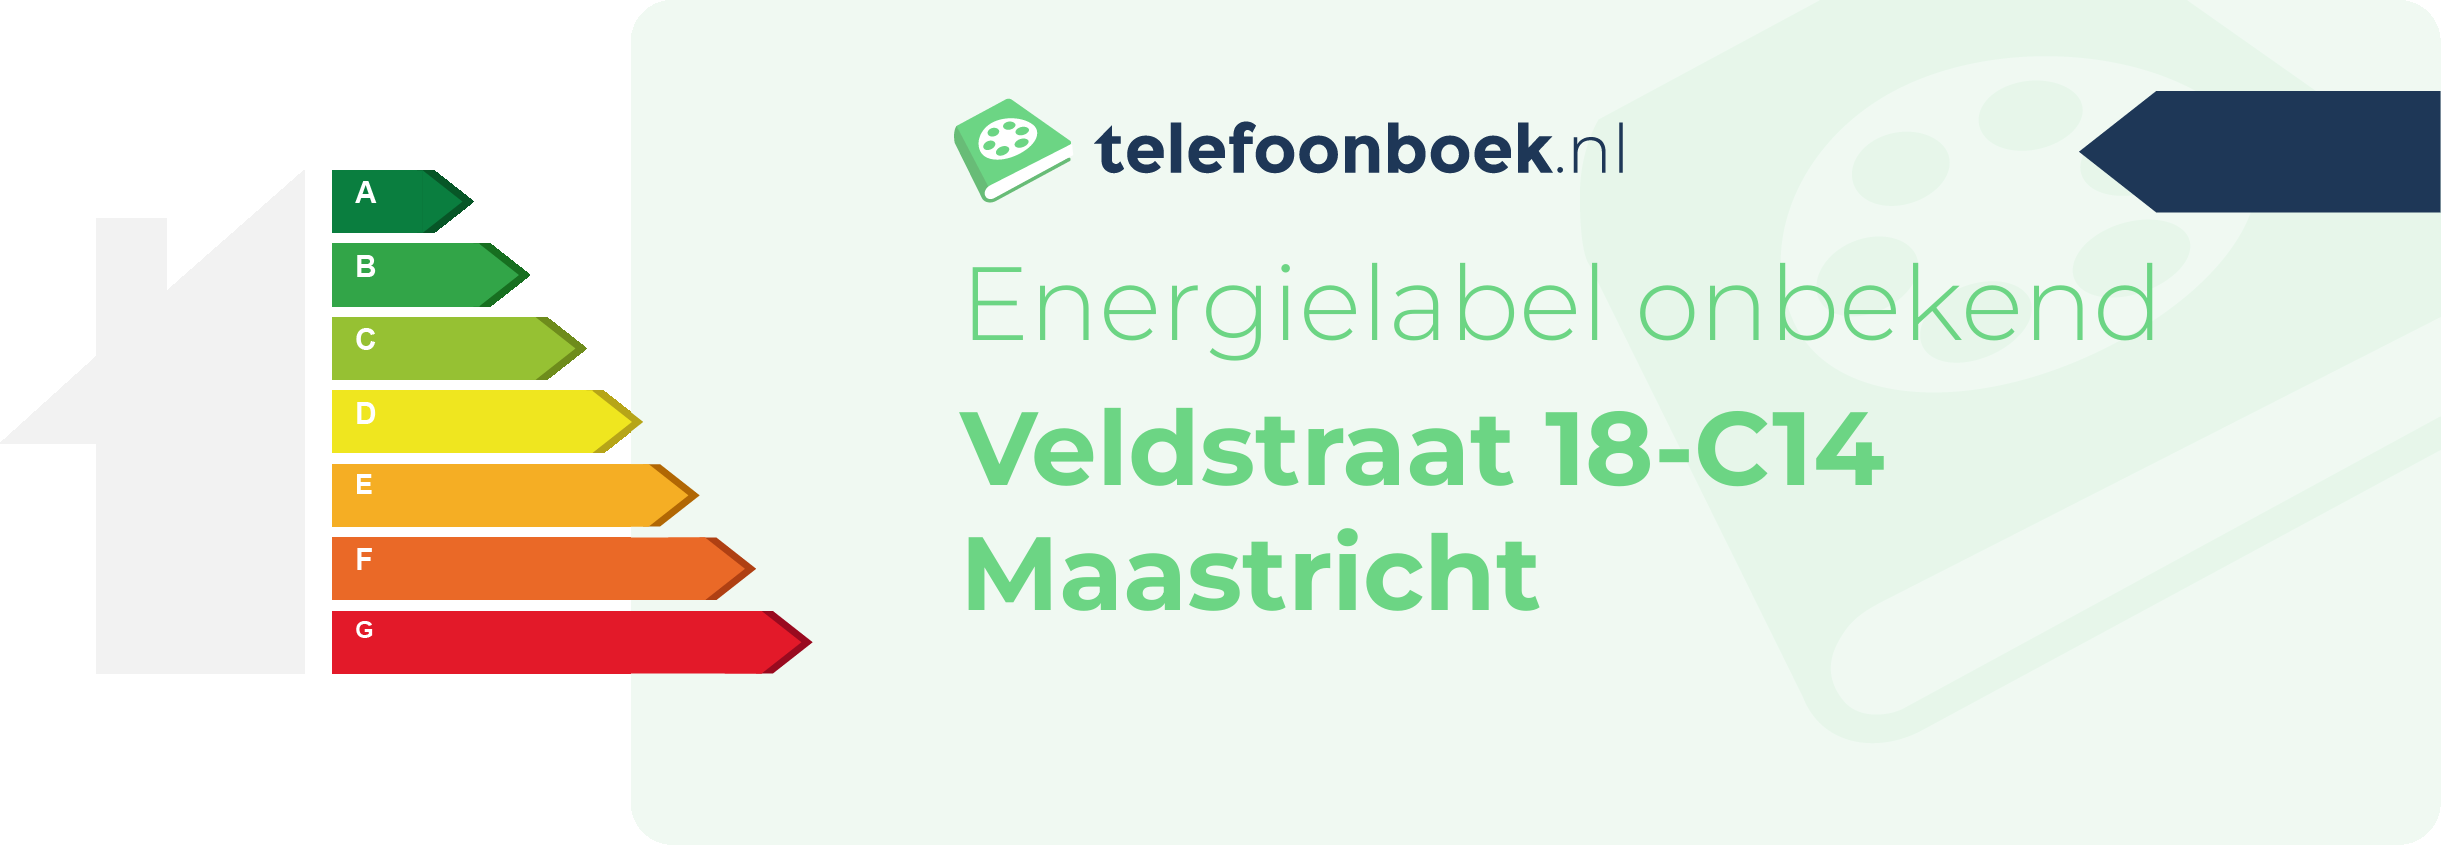 Energielabel Veldstraat 18-C14 Maastricht